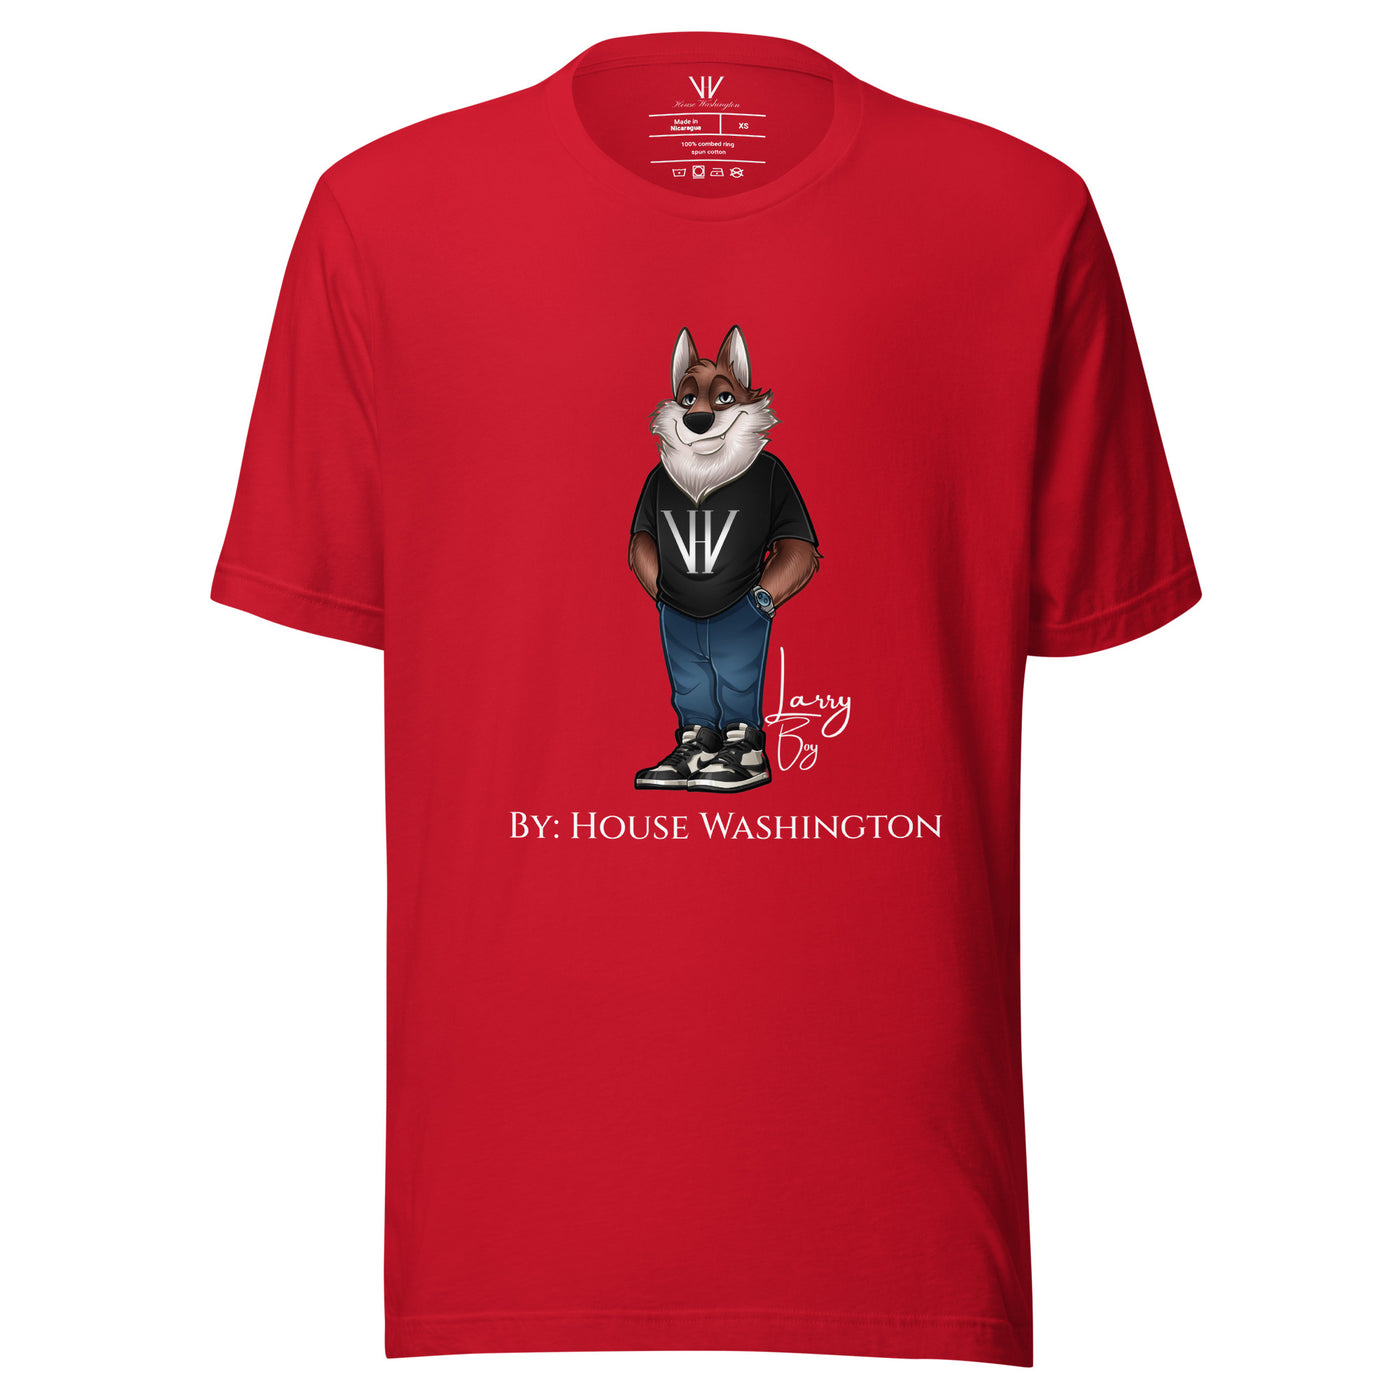 House Washington - "Larry Boy" - T-Shirt - Red